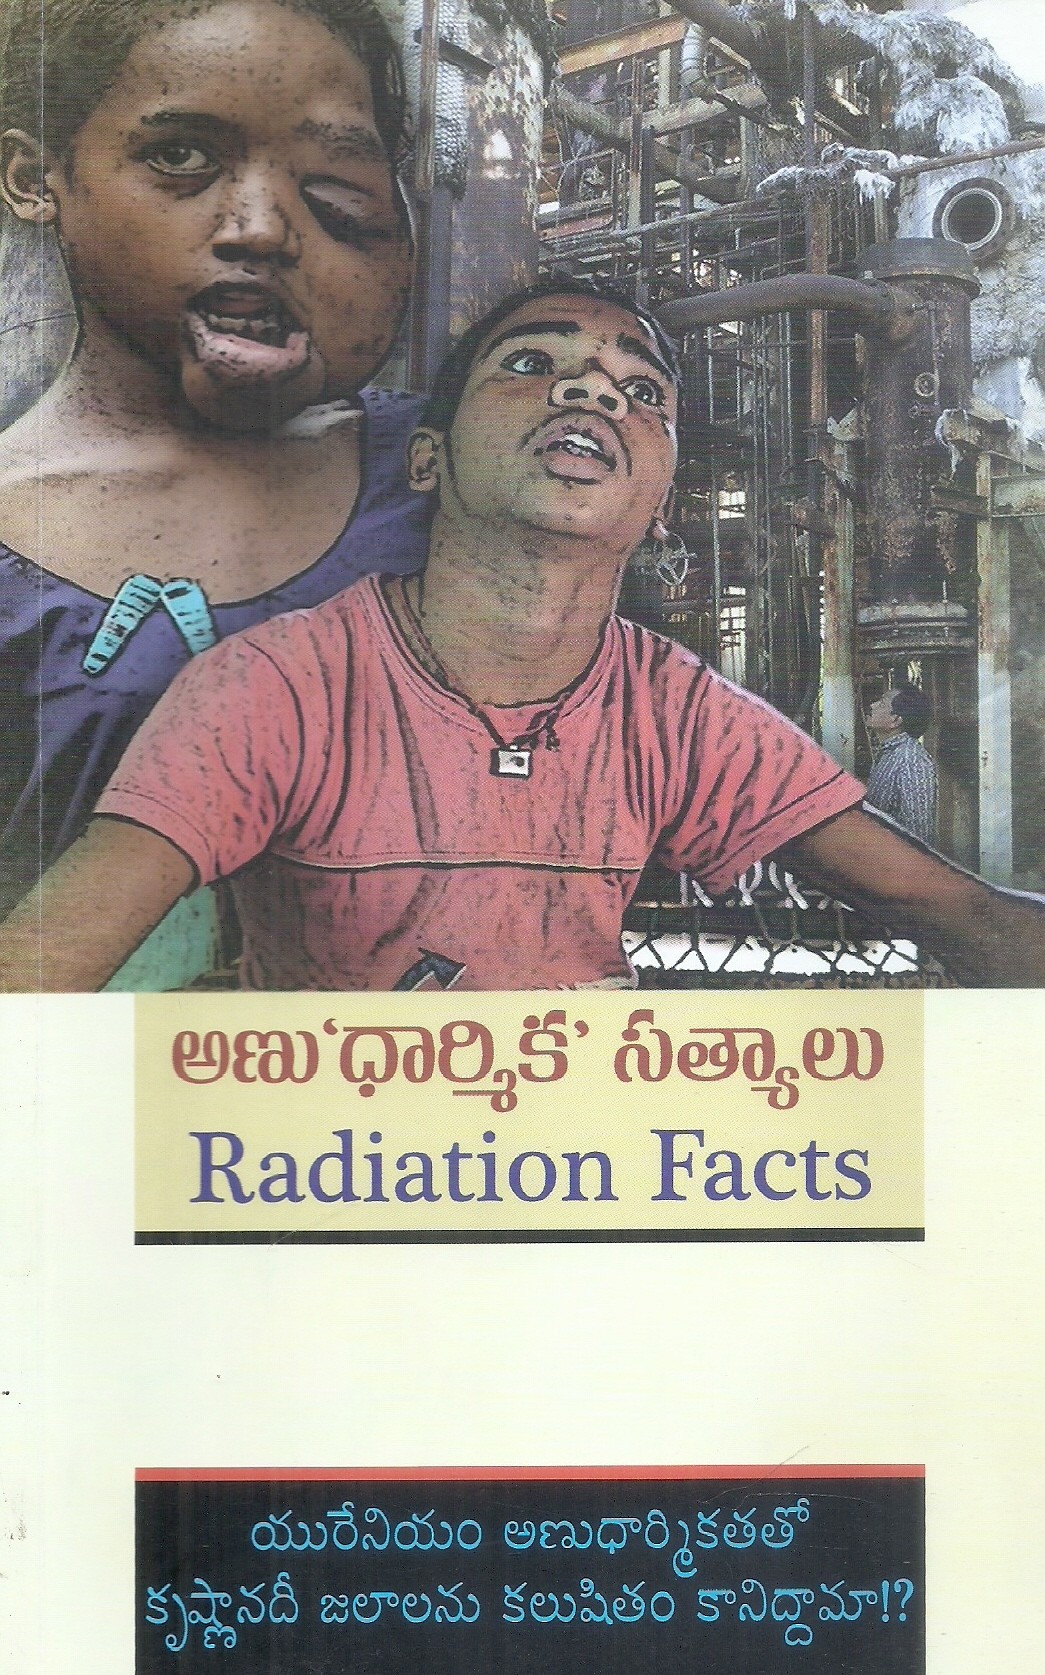 anu-dharmika-satyalu-yureniyam-anudharmikathatho-krishnanadi-balalanu-kalushitham-kaniddama-moment-against-uranium-project